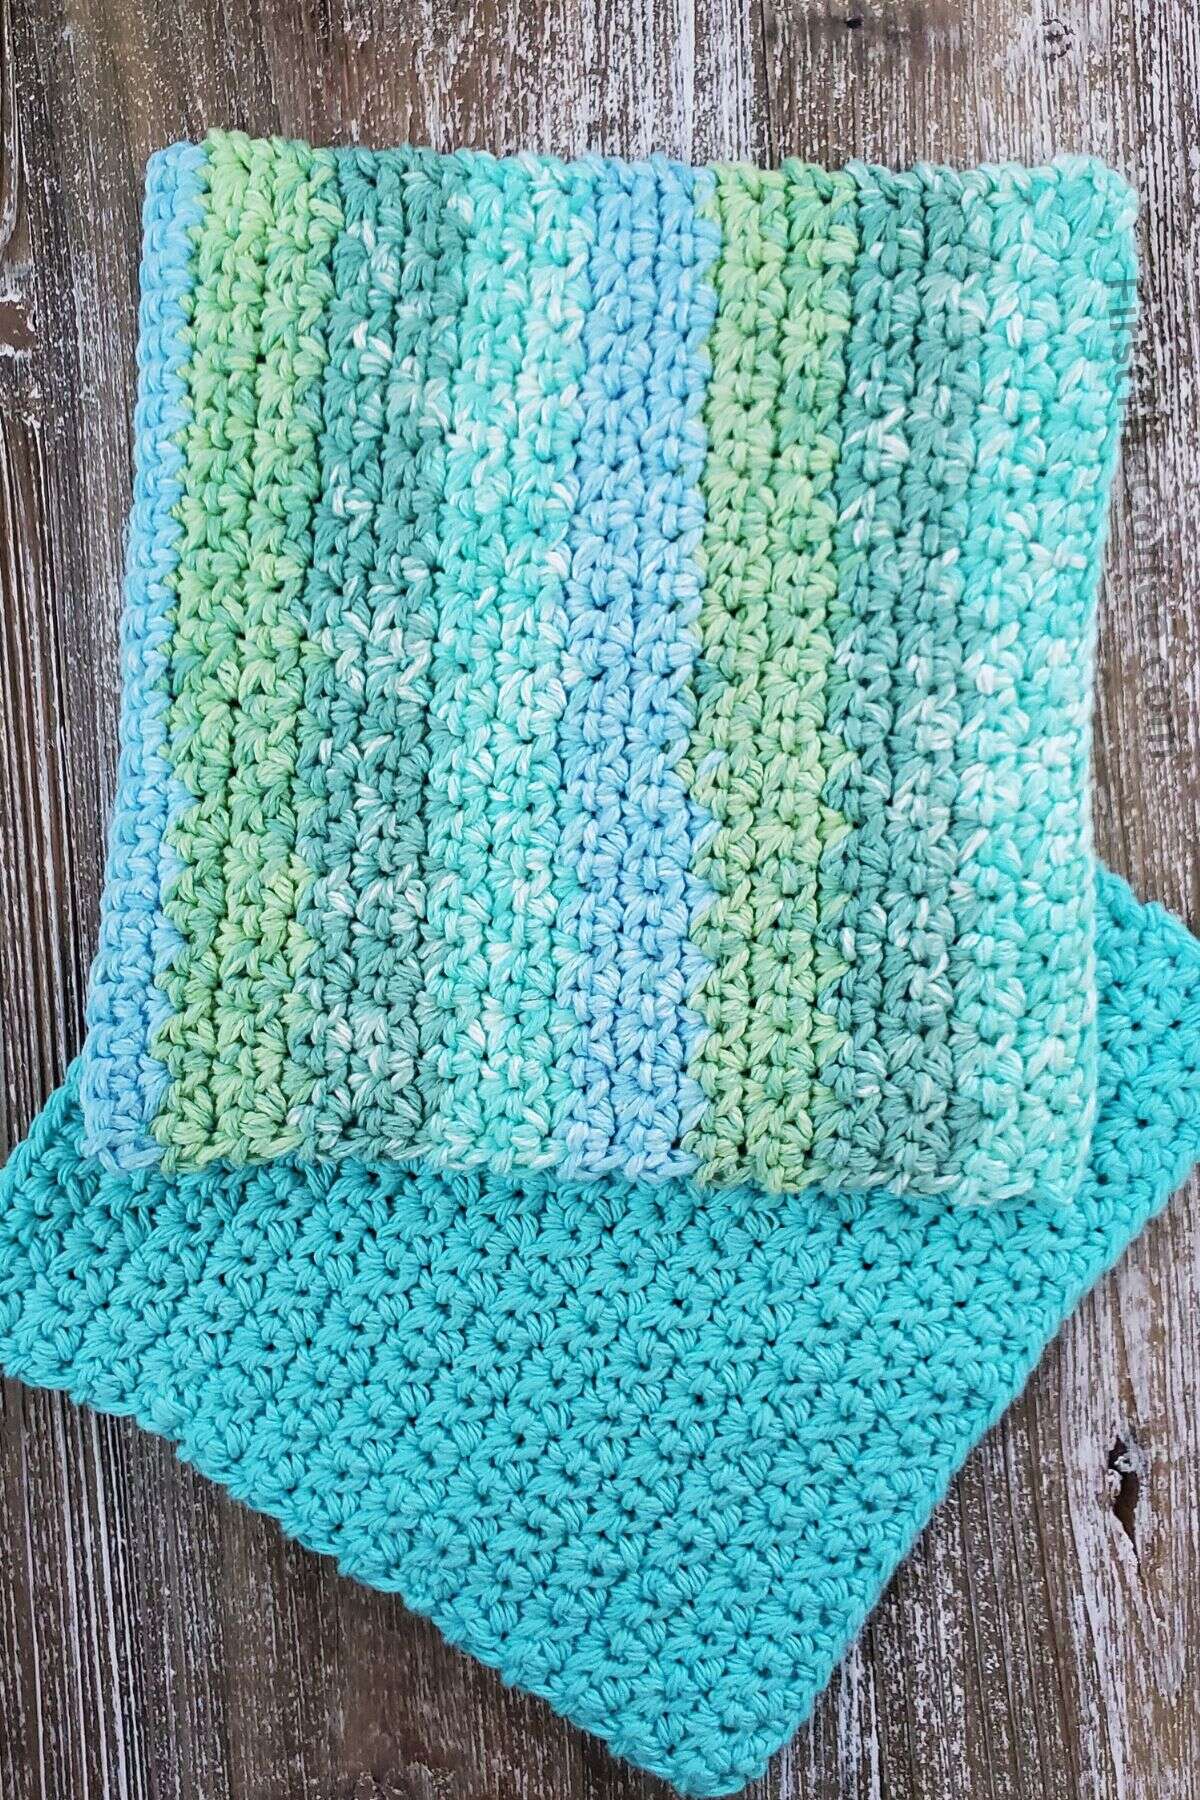 Easy Textured Dishcloth Crochet Pattern - Crochet Dreamz